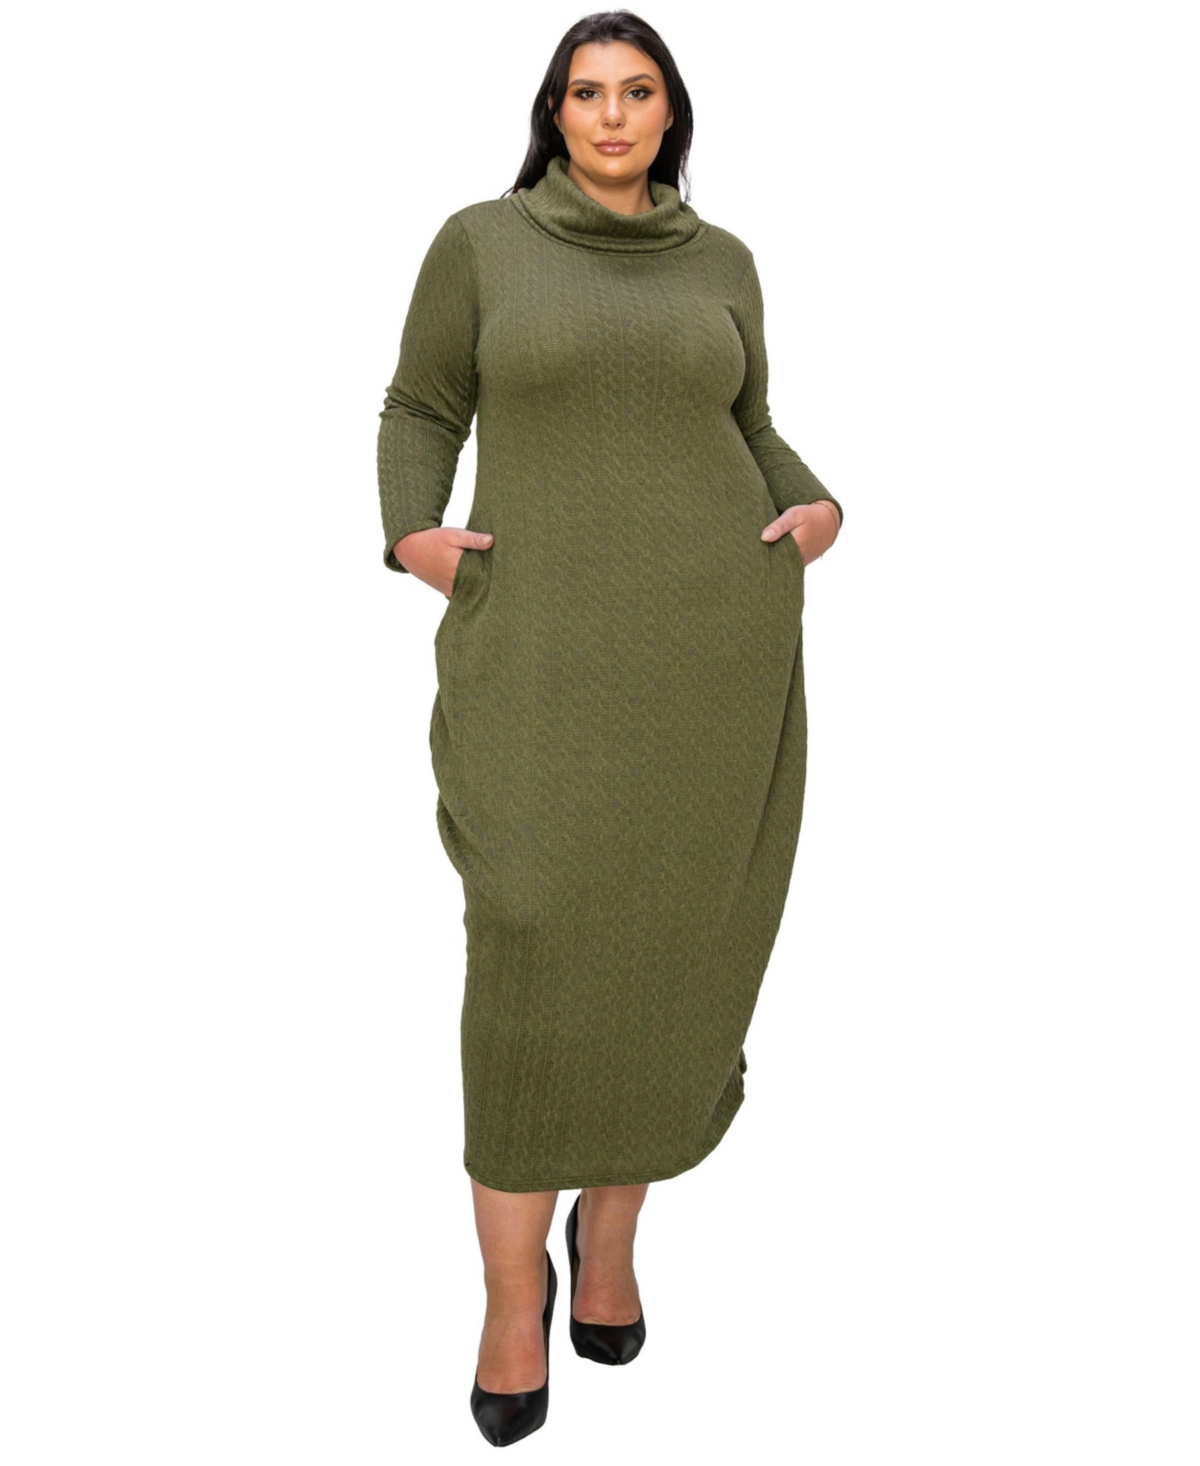 Plus Size Lana Cowl Turtle Neck Pocket Sweater Dress - Olive